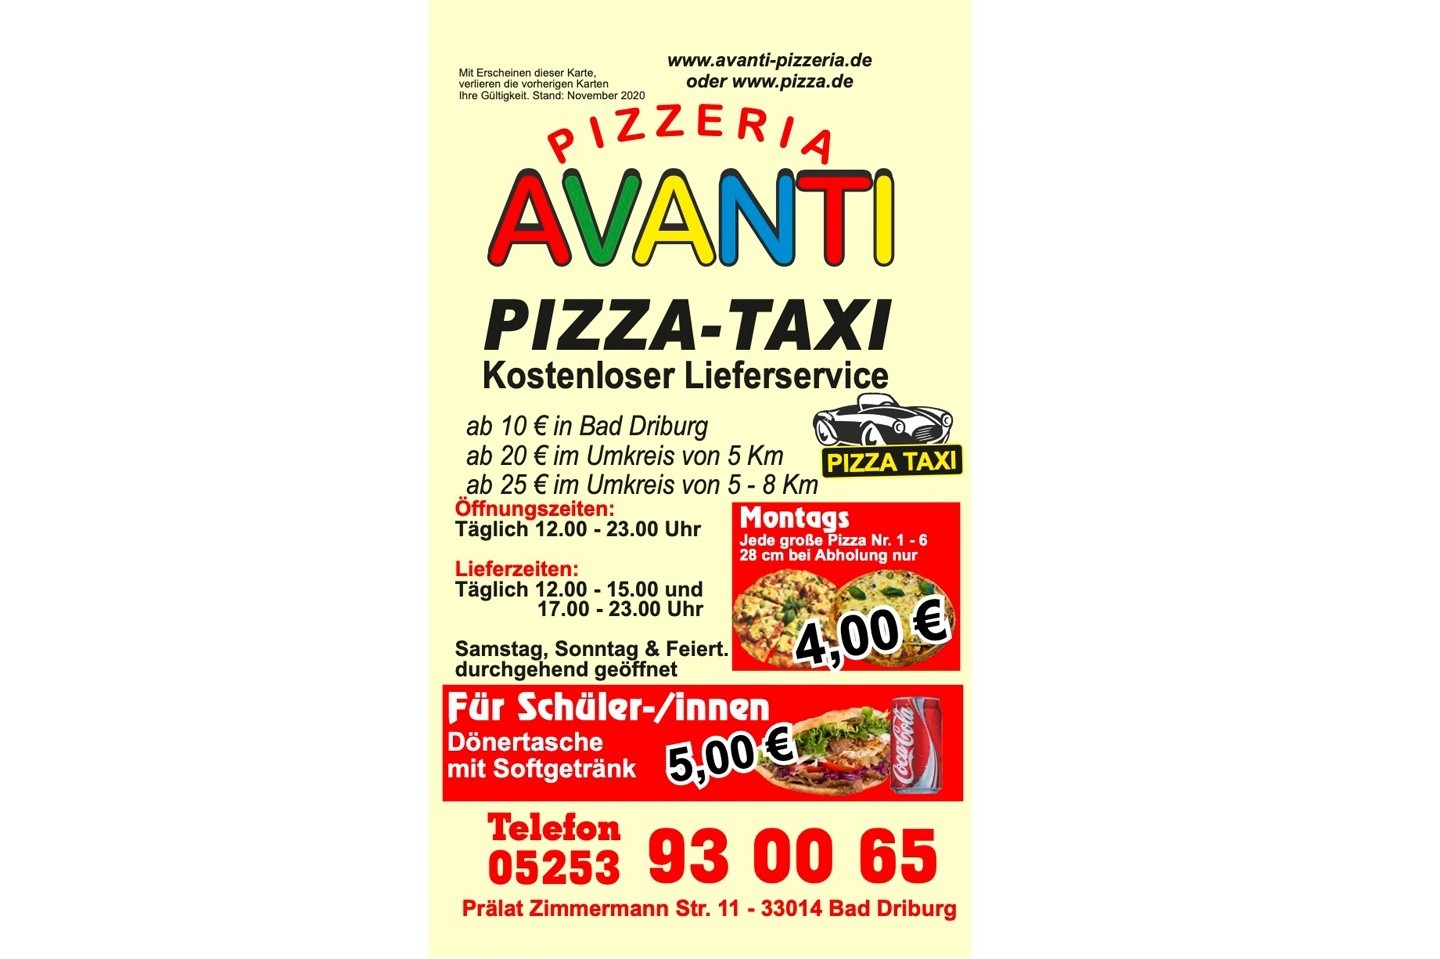 Jede große Pizza Ø 28 cm Nr. 1-6 am Montag nur 4,-€ bei Abholung